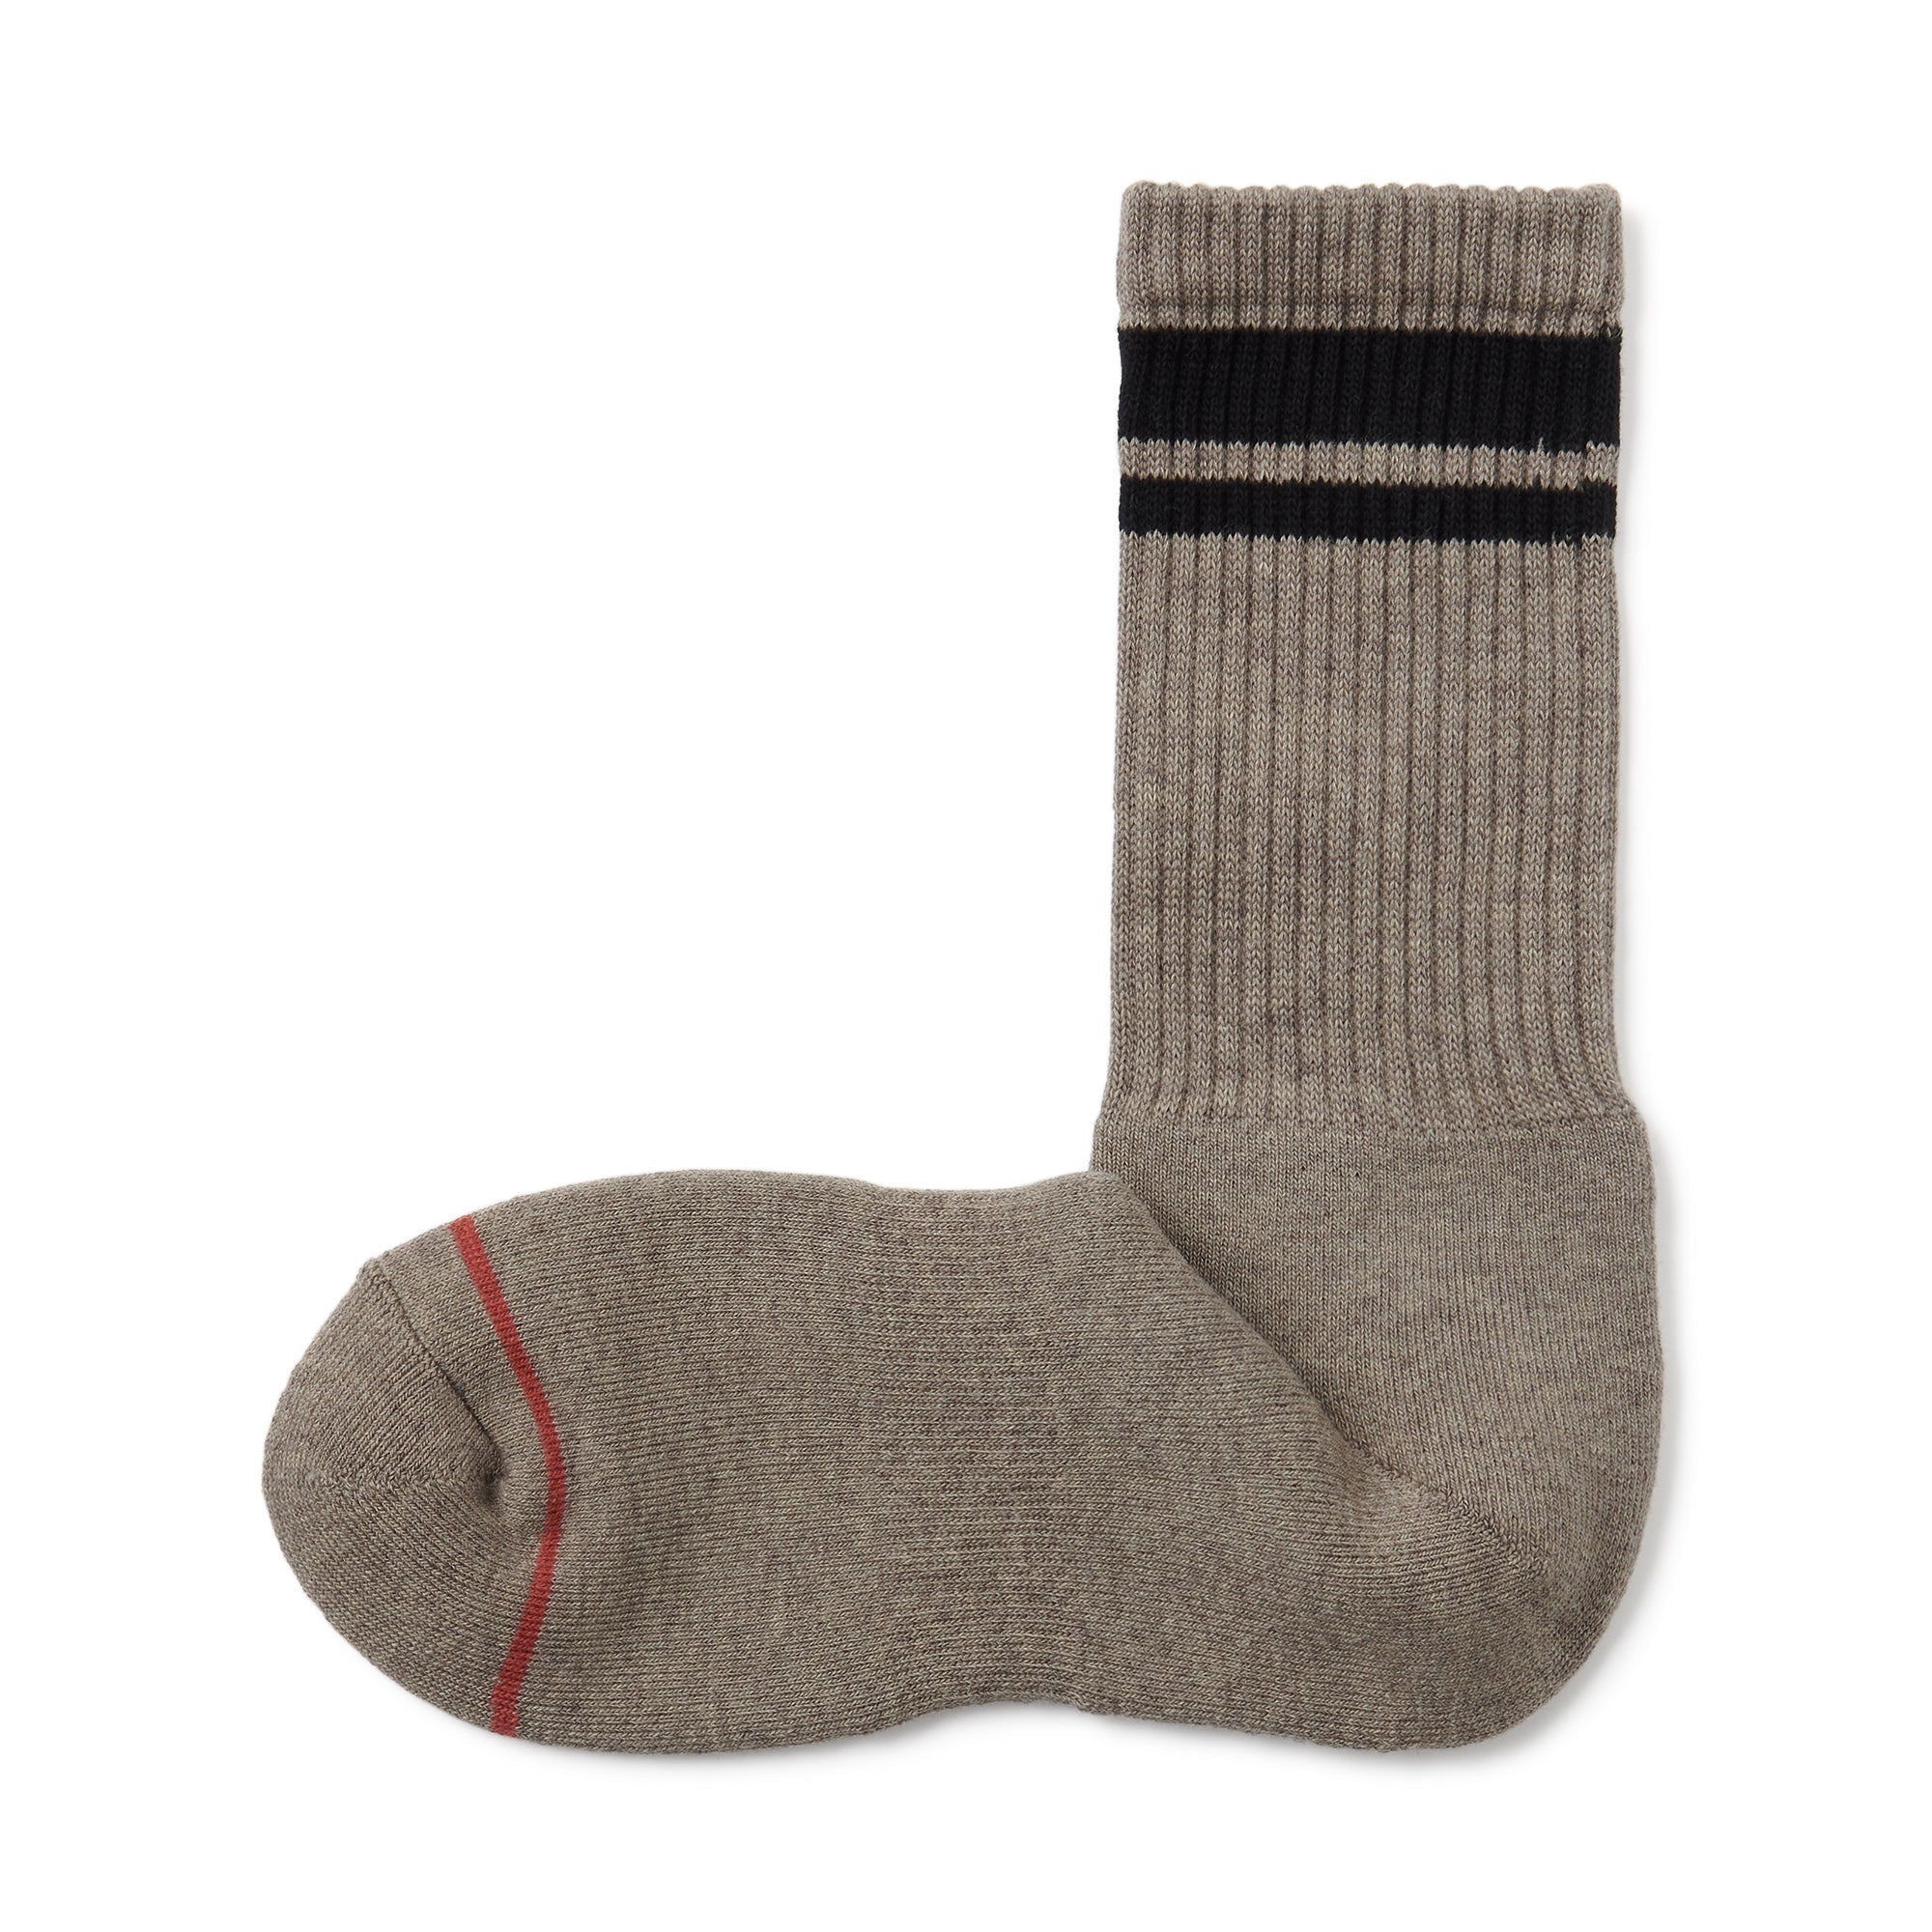 Warm Pile Cotton Patterned Socks